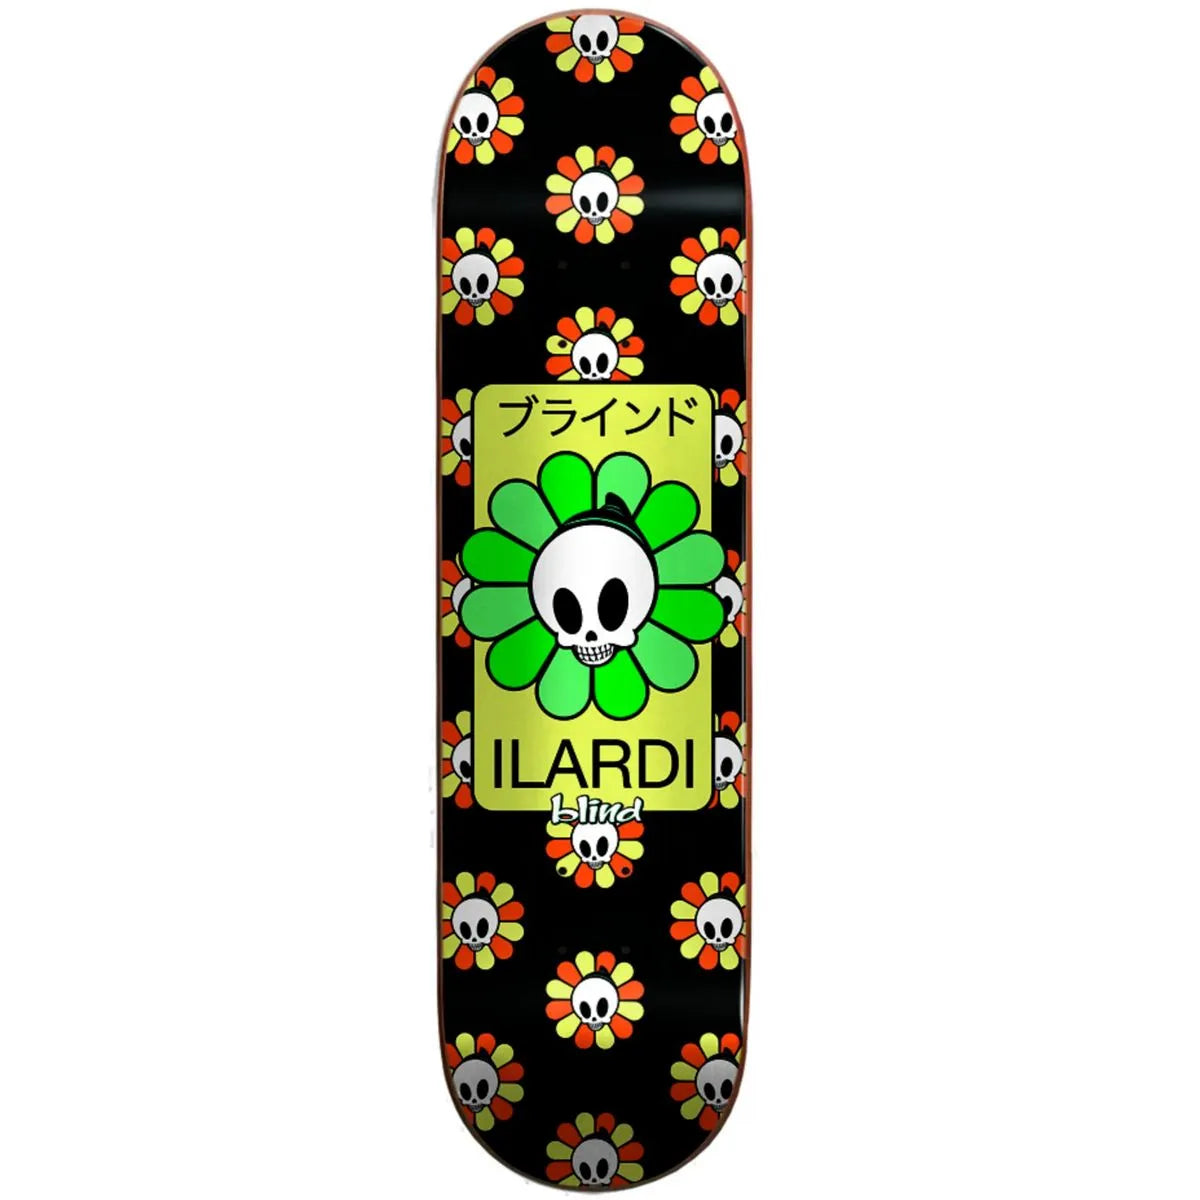 Blind Ilardi Reaper Bloom Resin 7 8.25" Skateboard Deck